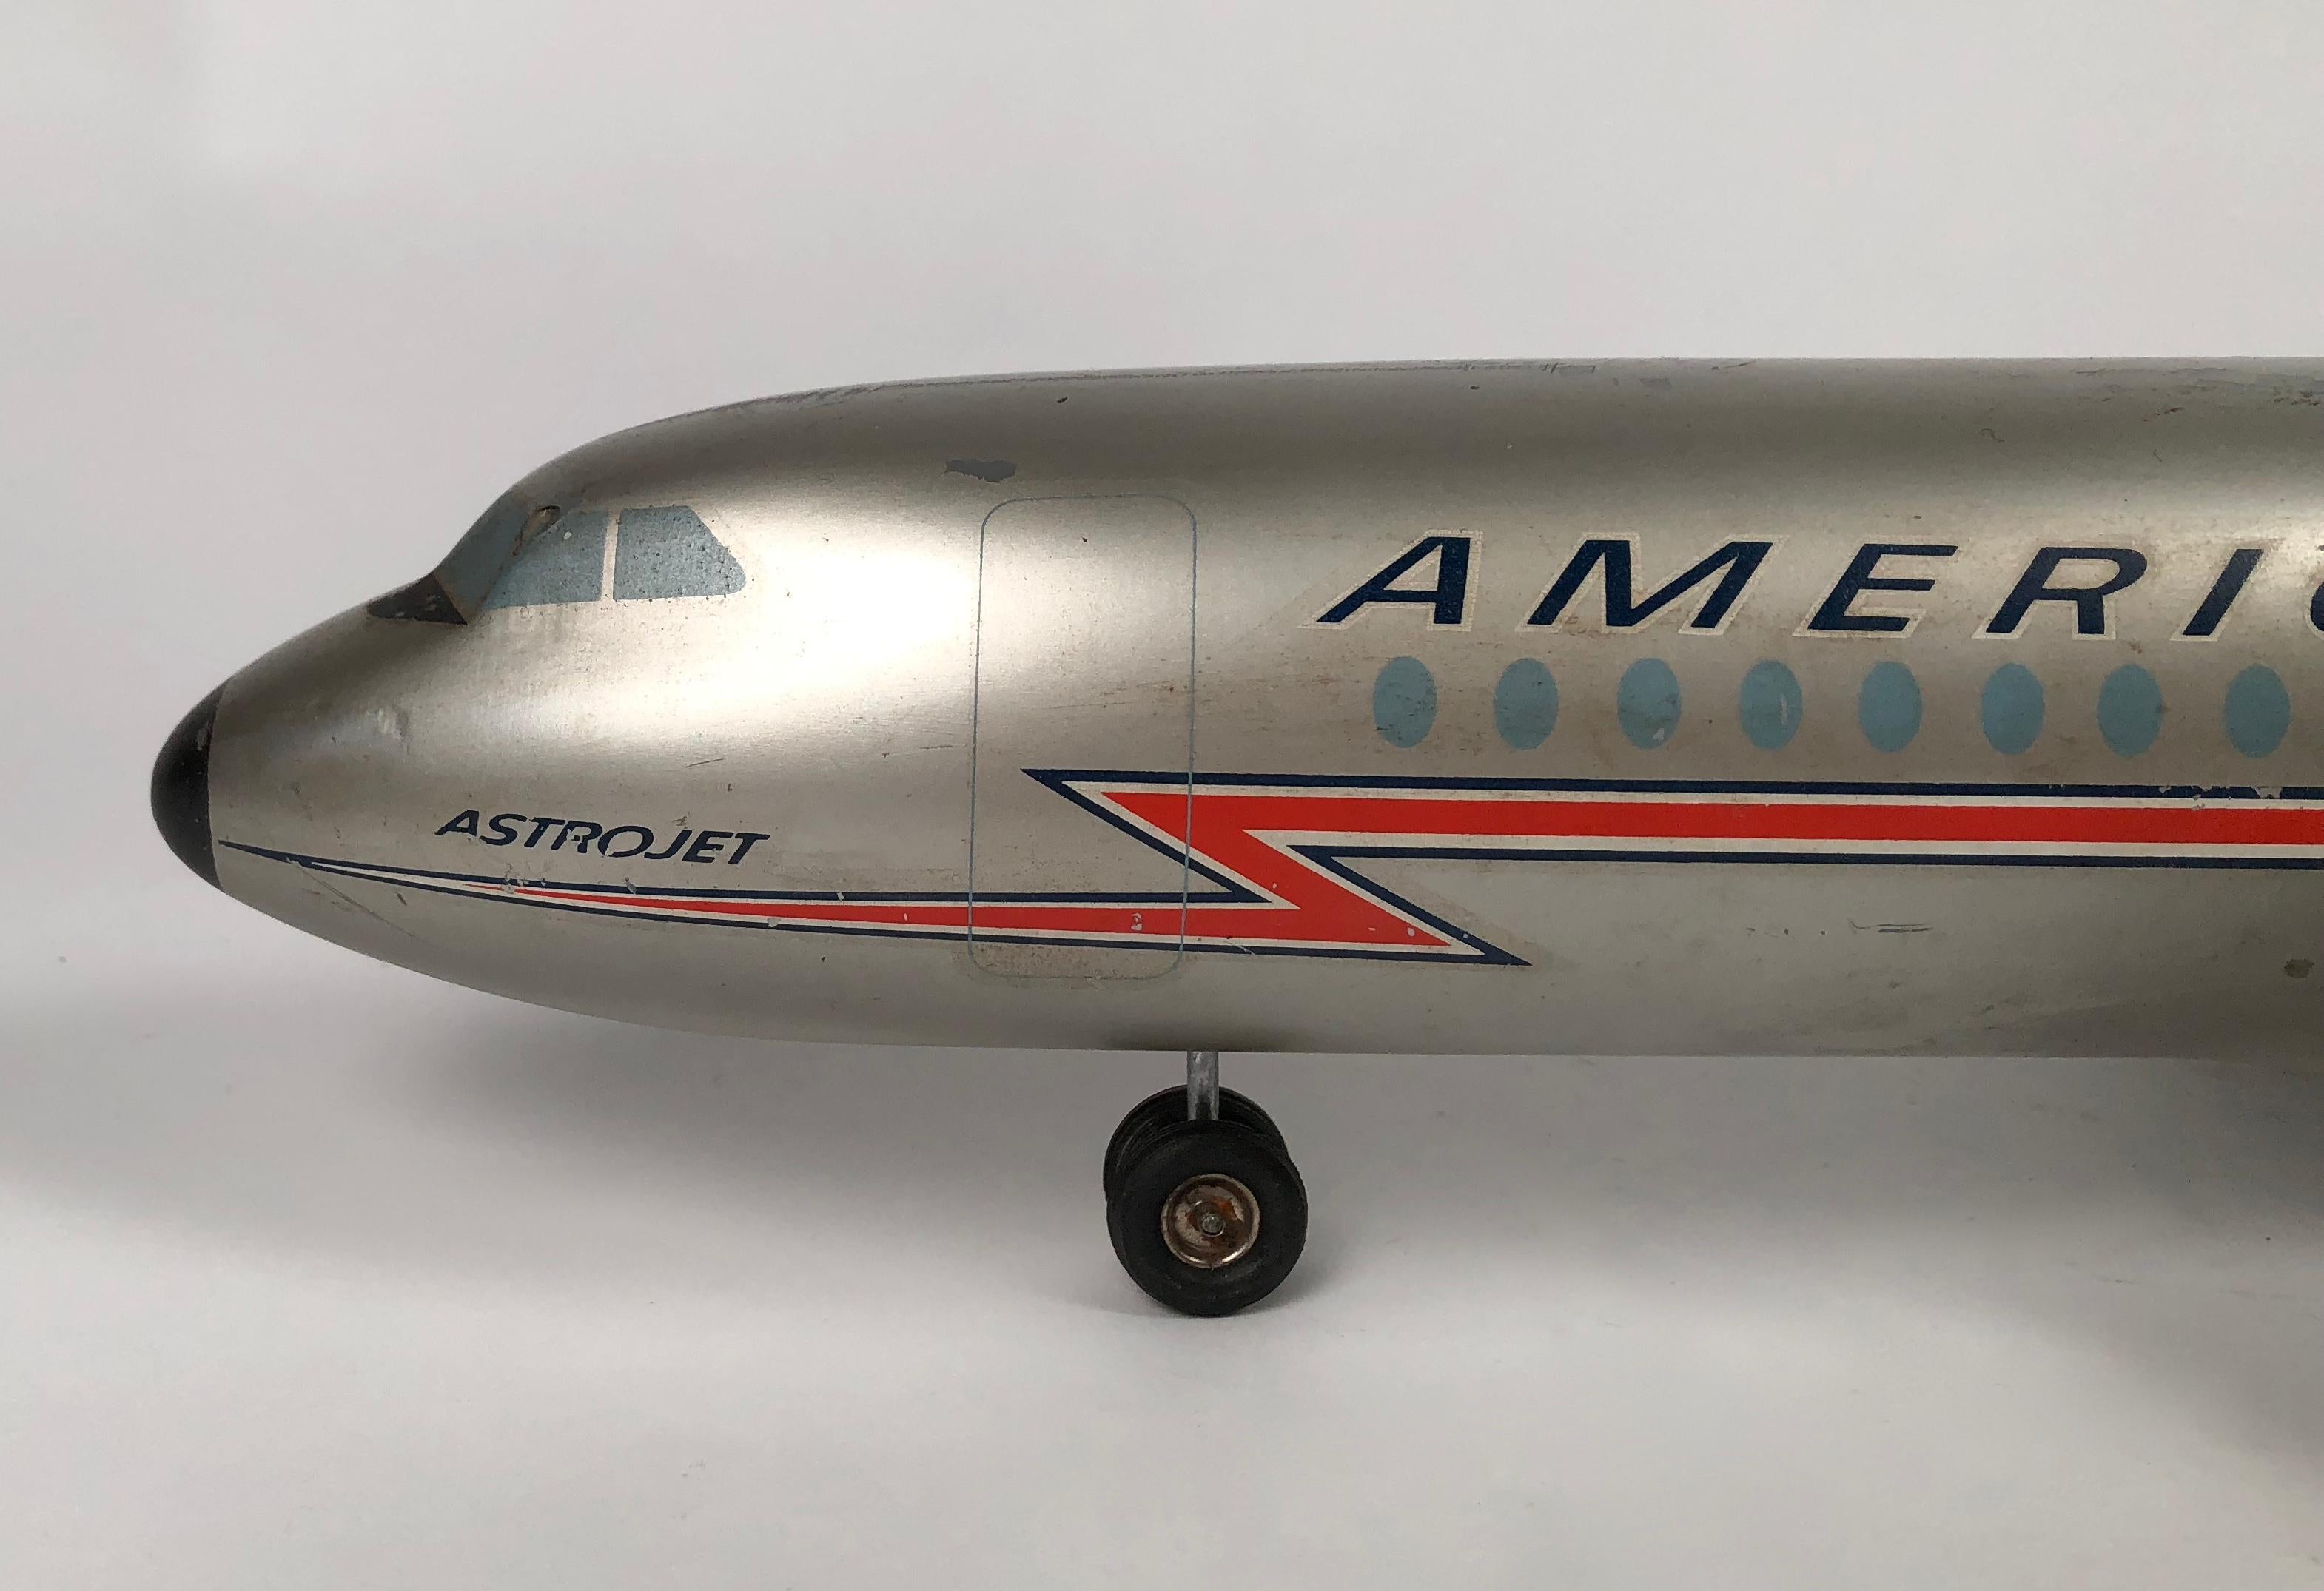 Vintage American Airlines Astrojet Aviation Model 1